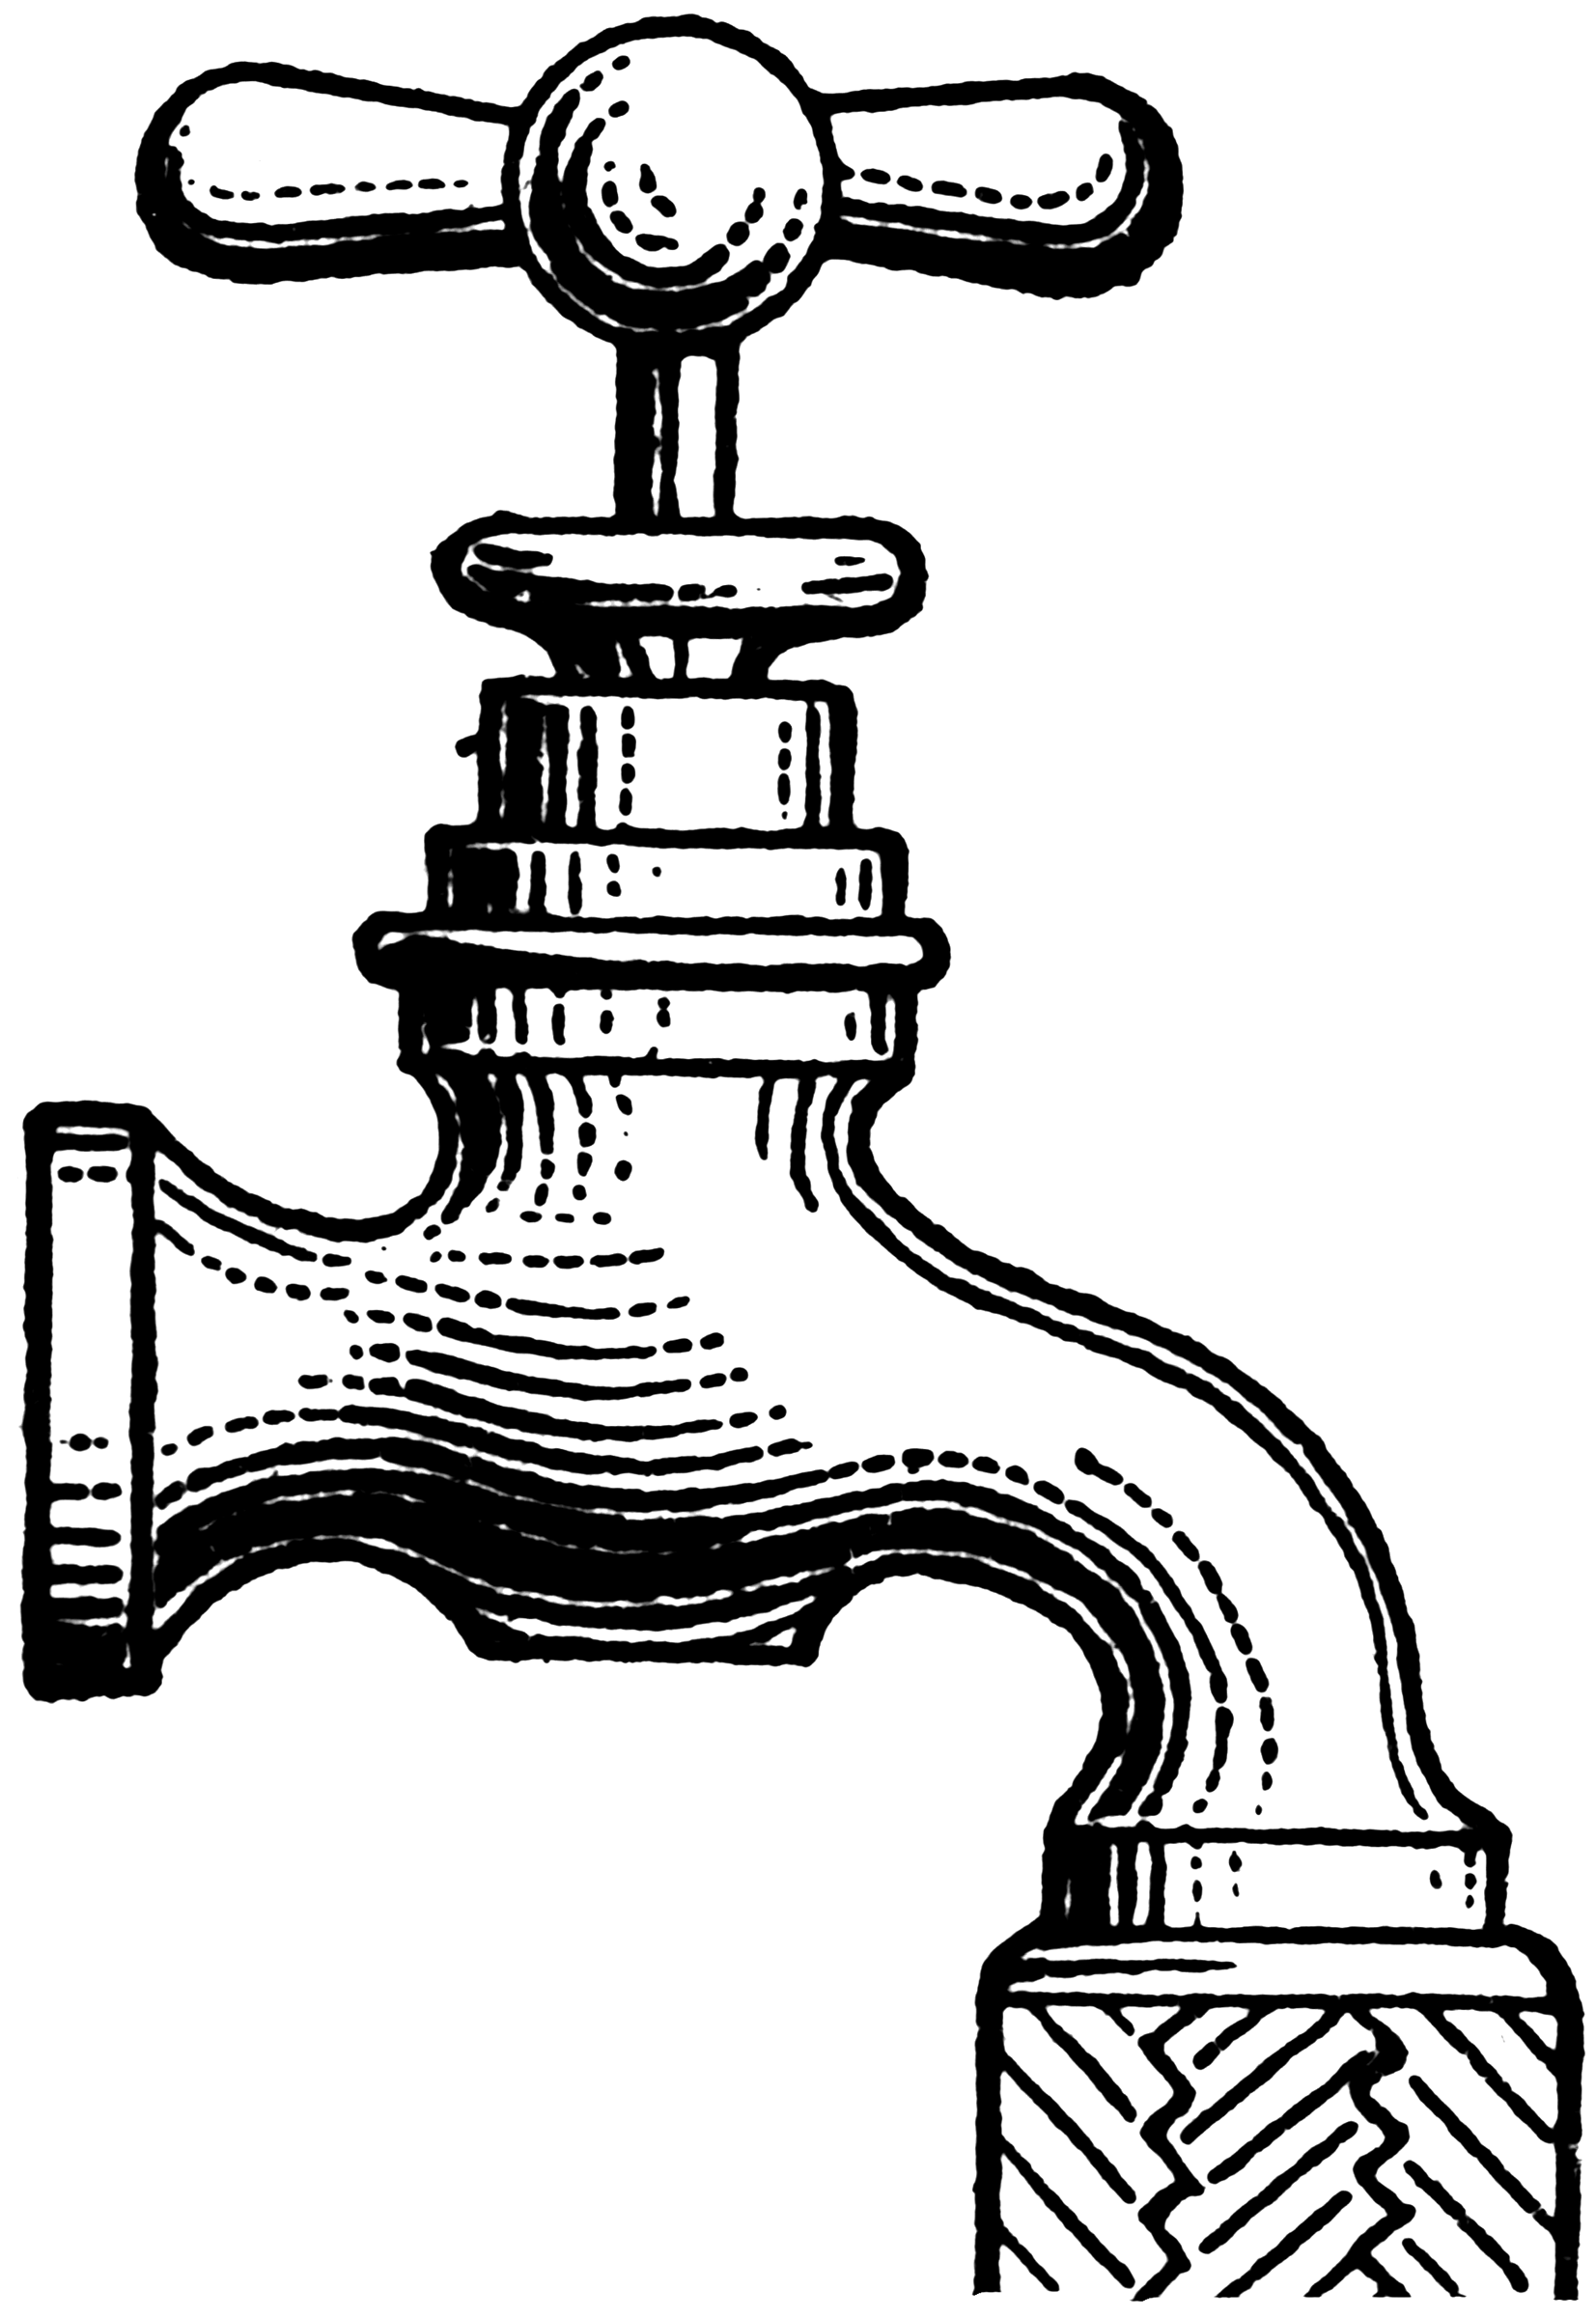 Водопровод рисунок. Кран водопроводный. Кран с водой рисунок. Векторное изображение водопровод. Tap рисунок.